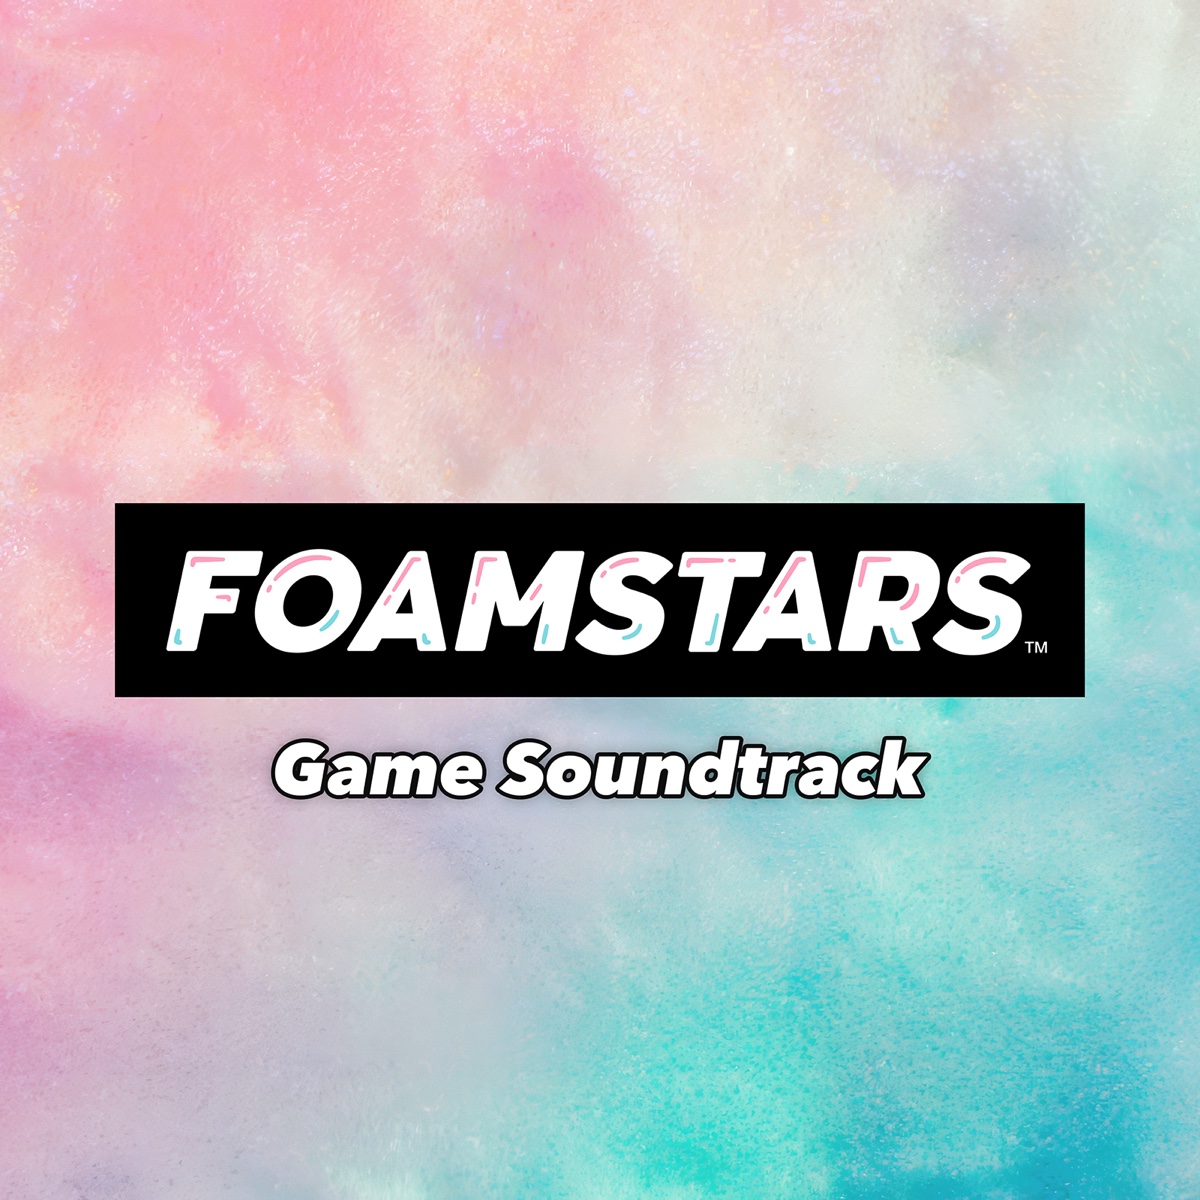 『FOAMSTARS』オリジナル・サウンドトラックが配信開始